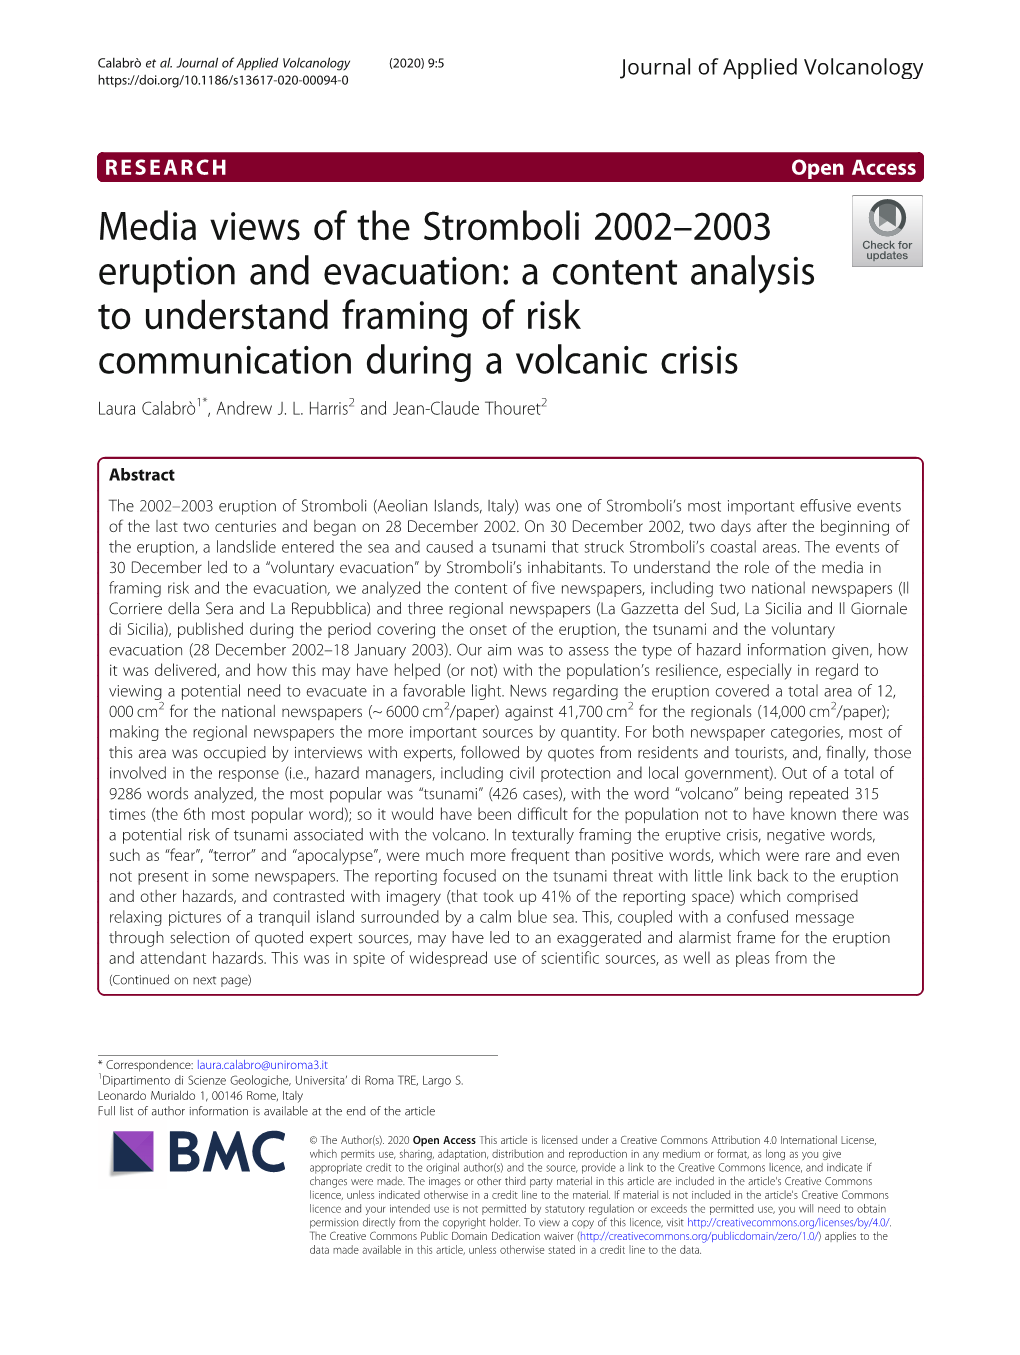 Media Views of the Stromboli 2002–2003 Eruption and Evacuation